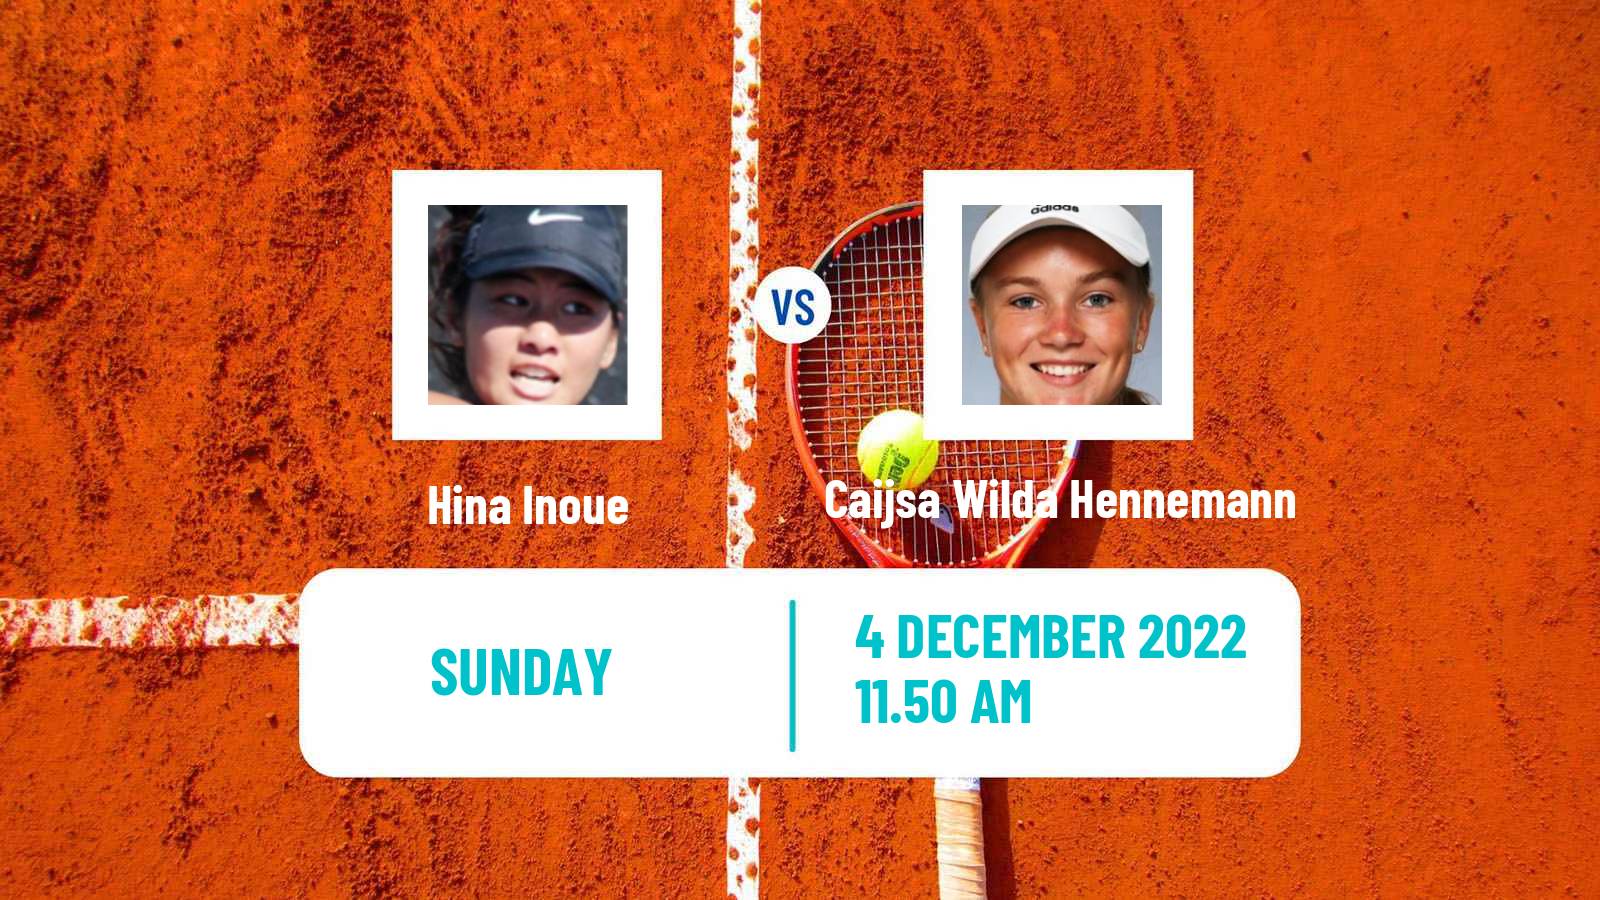 Tennis ATP Challenger Hina Inoue - Caijsa Wilda Hennemann